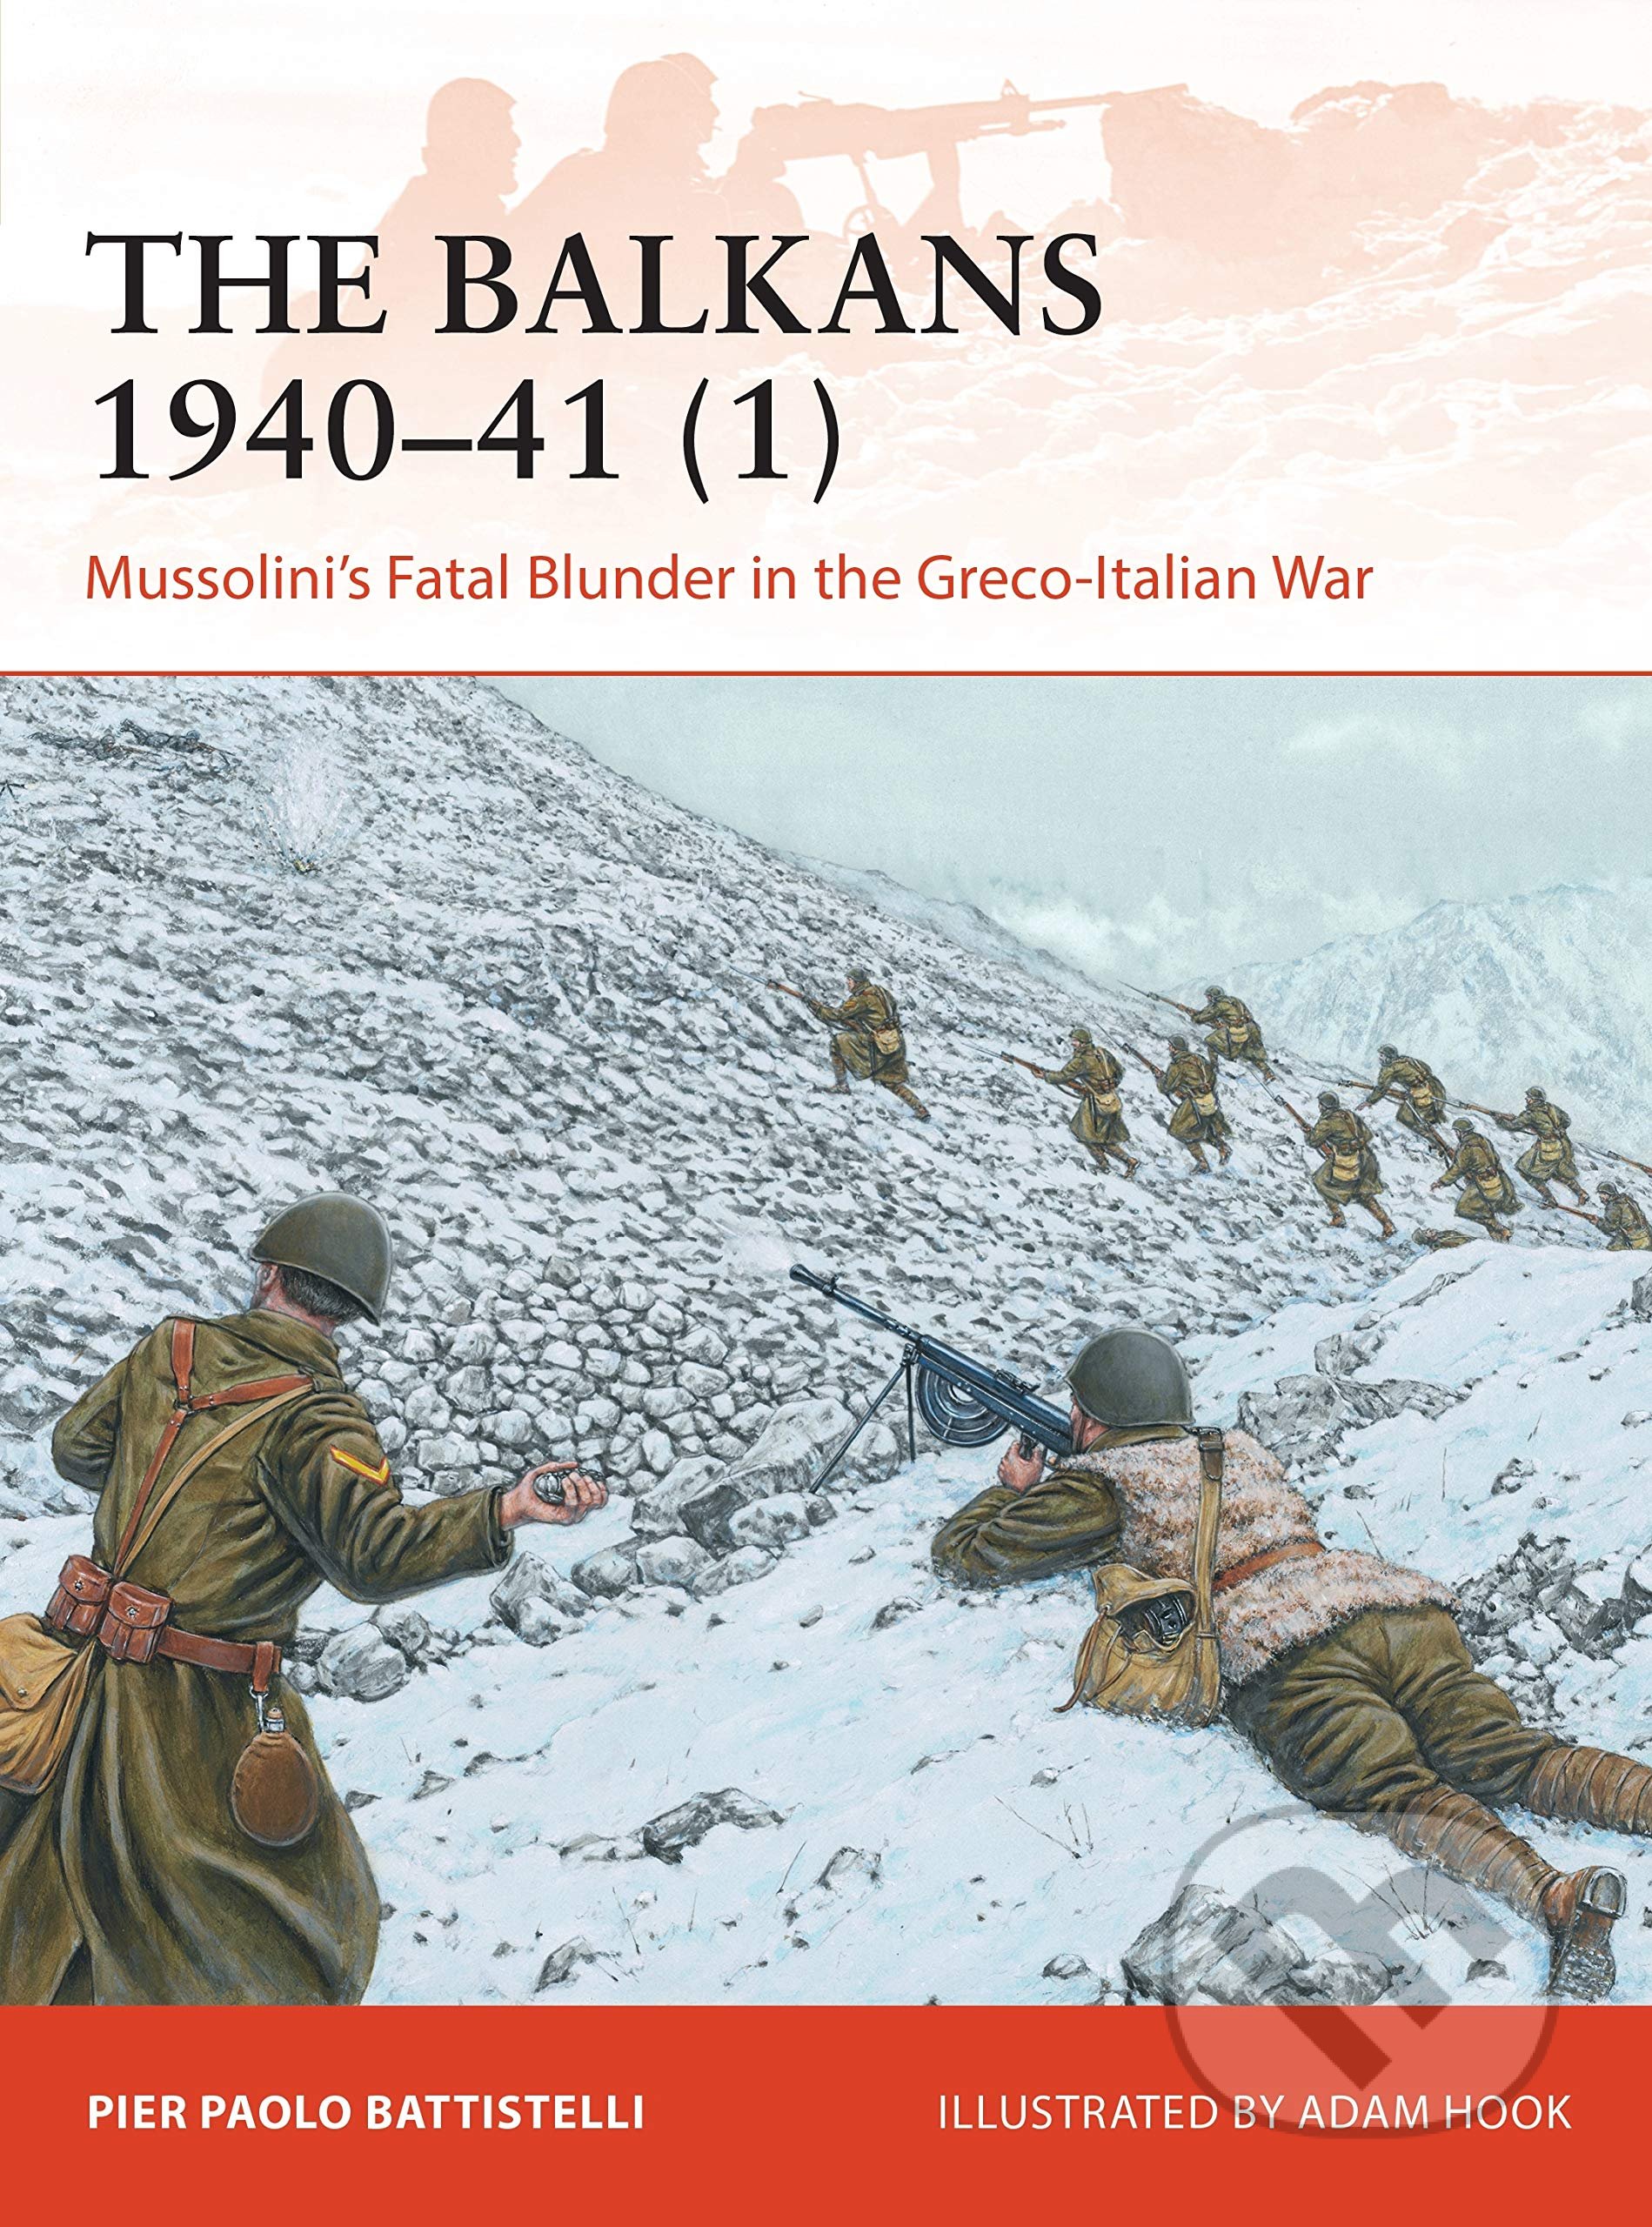 Balkans 1940-41 (1) - Pier Paolo Battistelli, Adam Hook (ilustrátor), Osprey Publishing, 2021